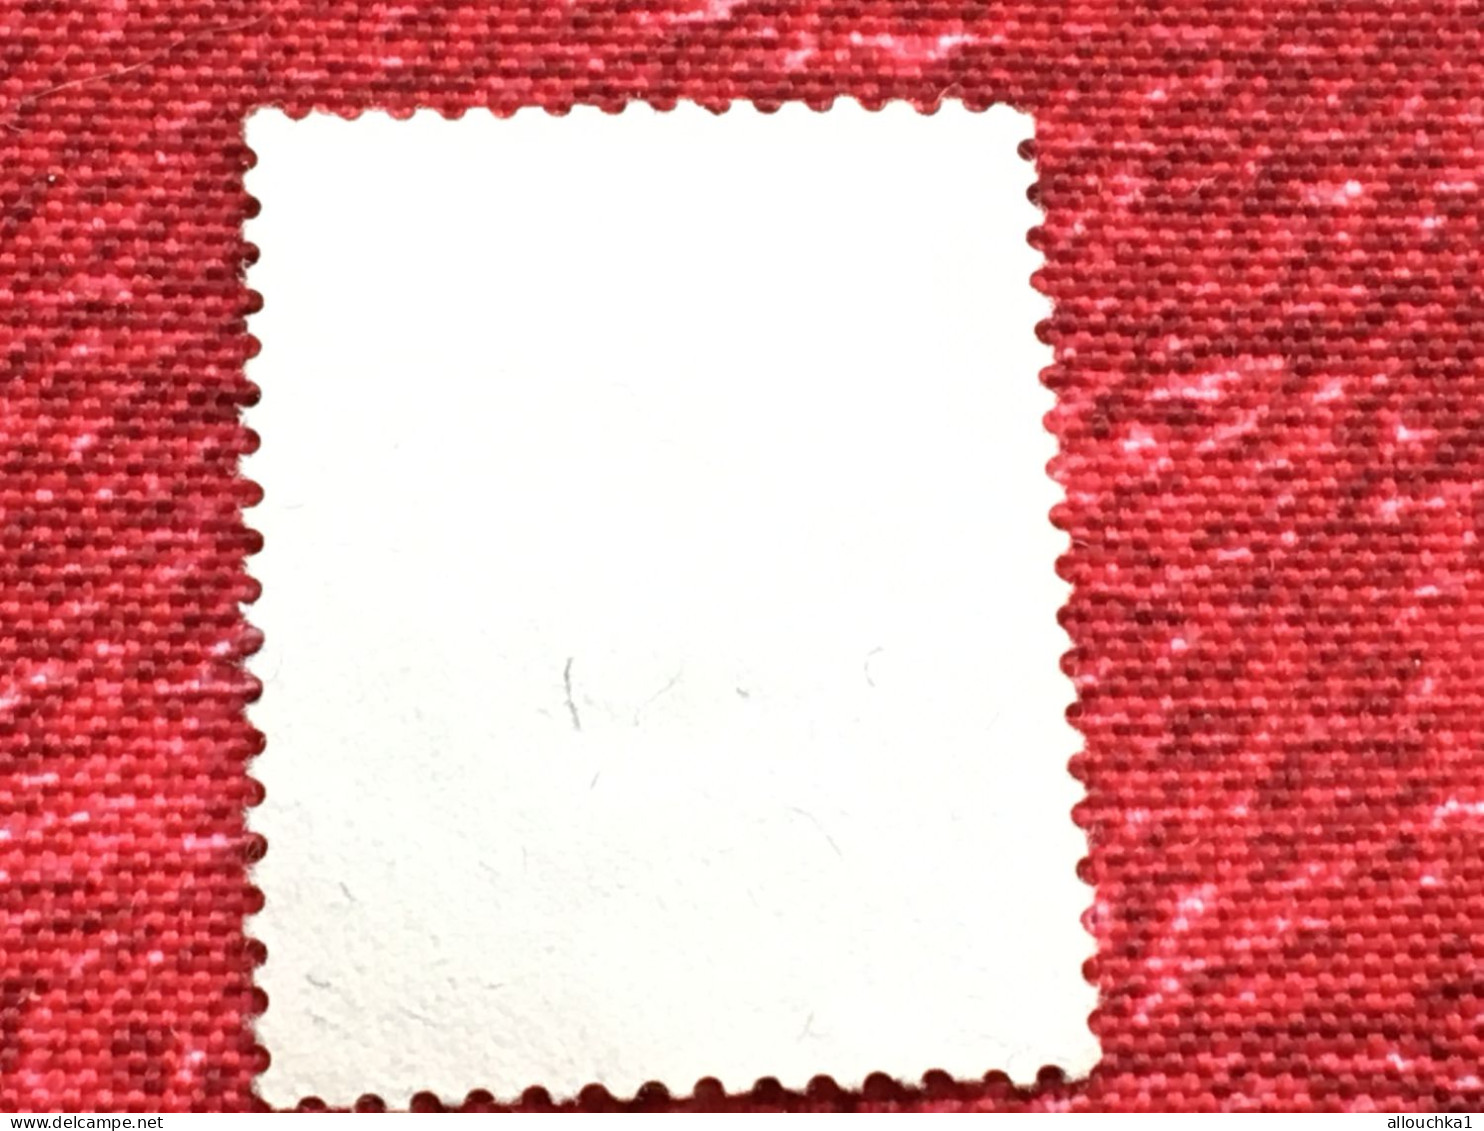 1960 Croix Rouge Française Red Cross -Timbre Vignette (*) -Erinnophilie-[E]Stamp-Sticker-Viñeta-Bollo - Croce Rossa